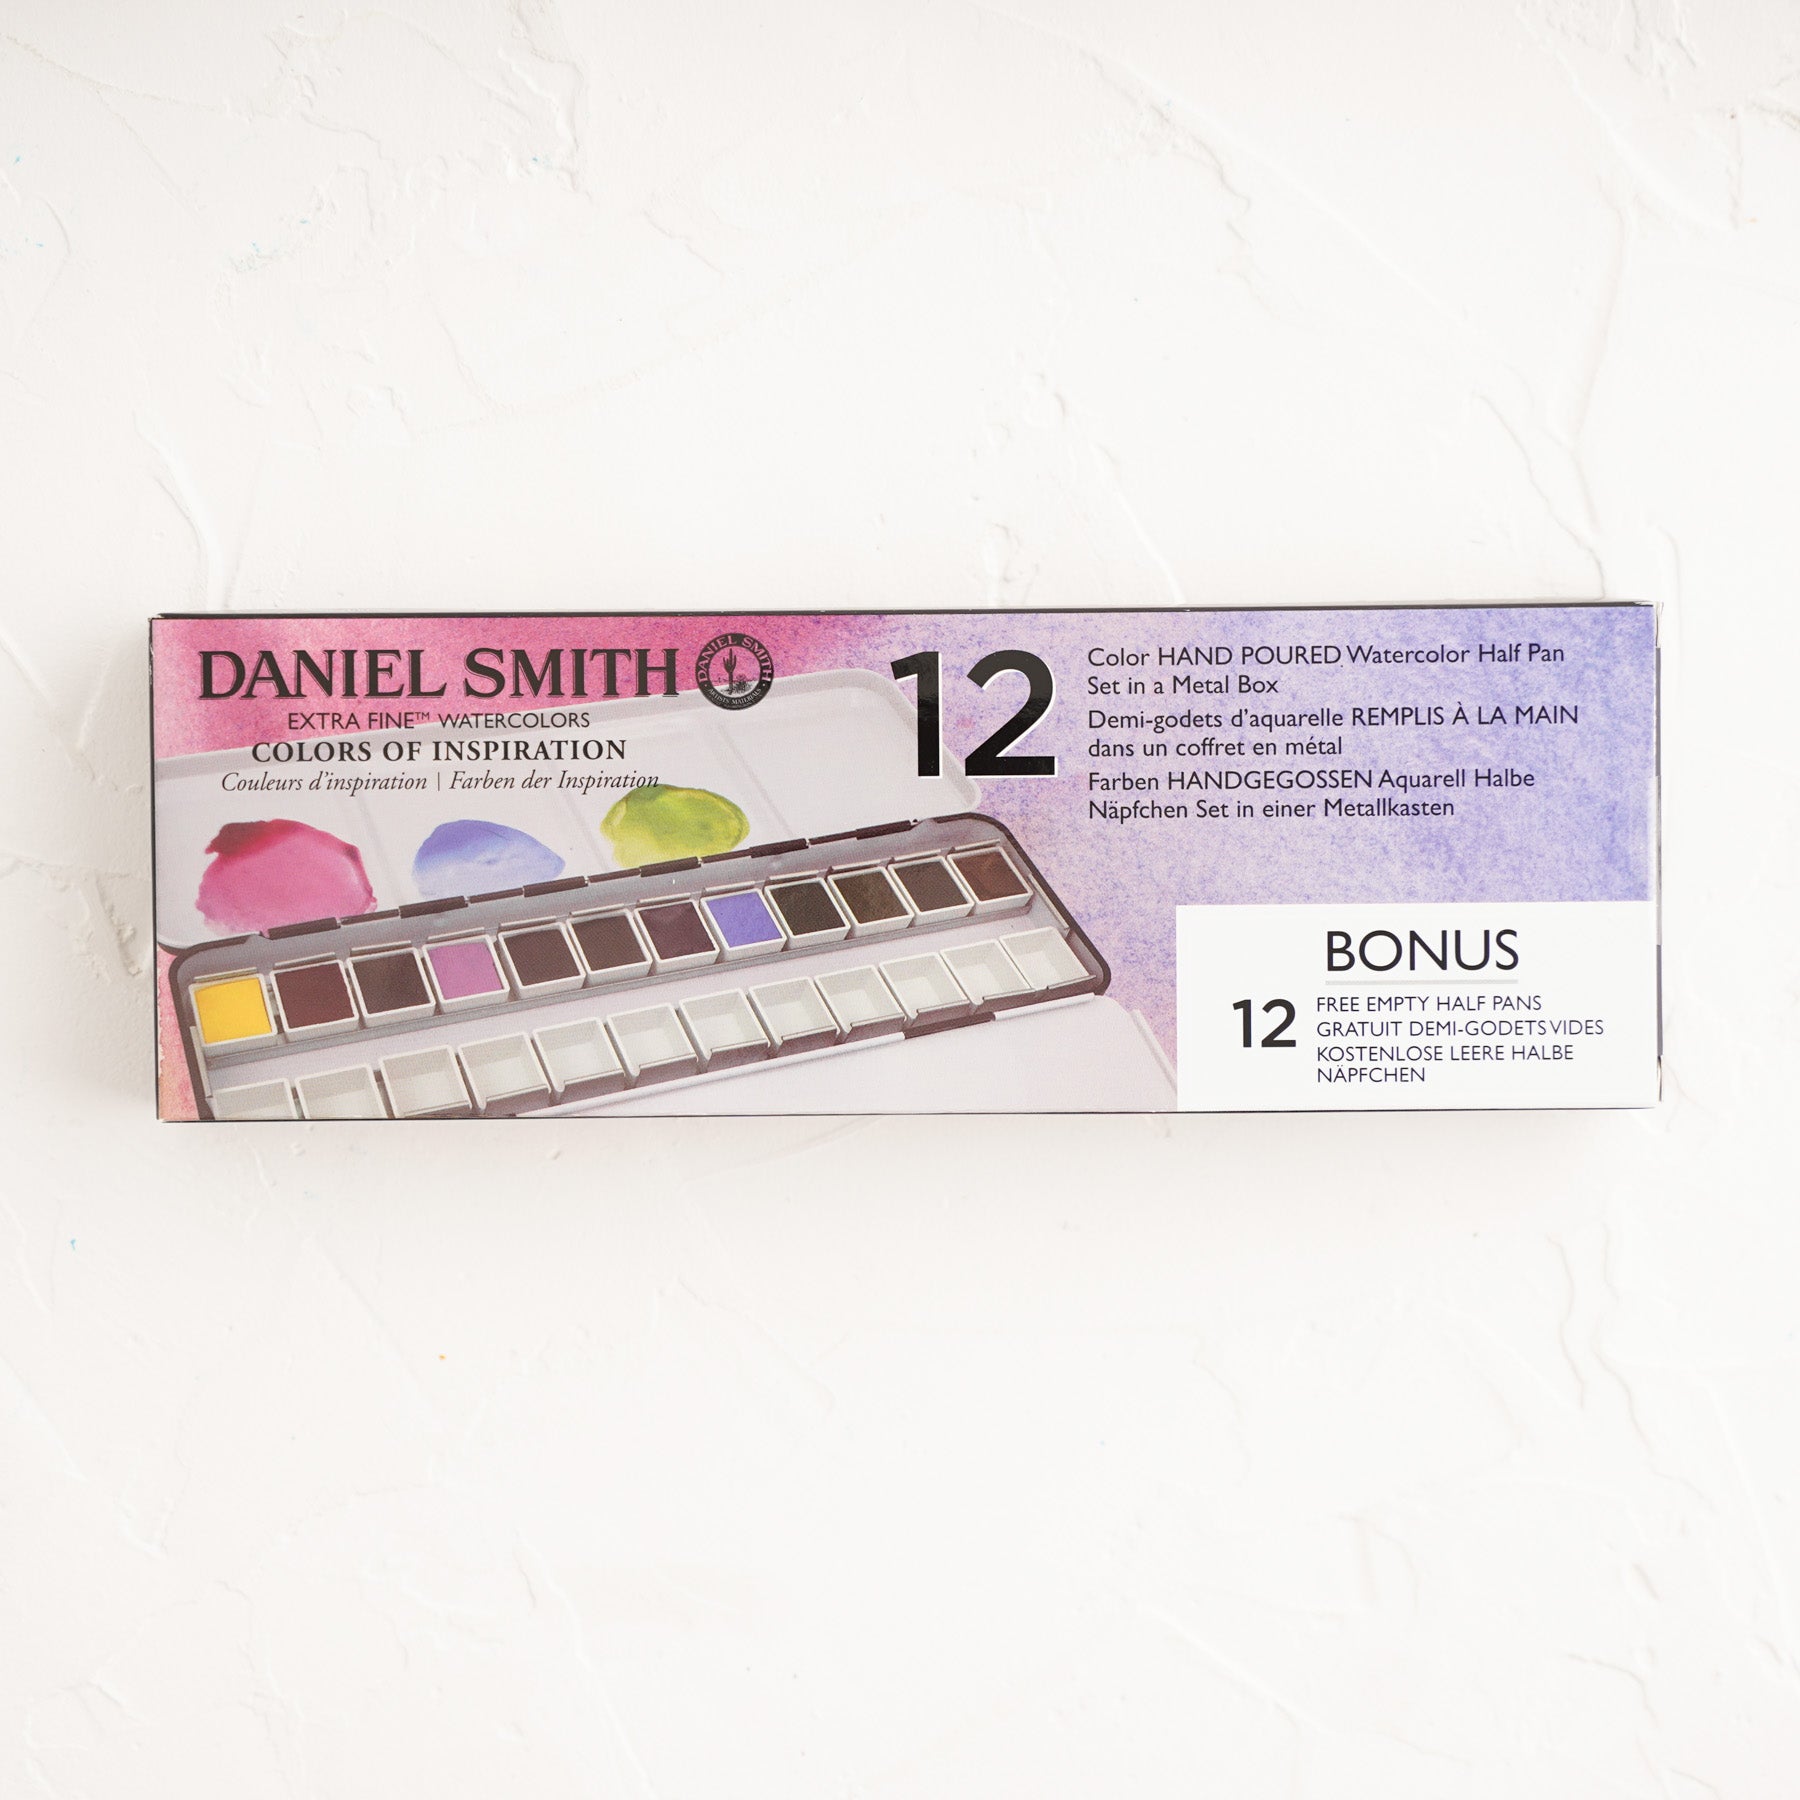 Daniel Smith Extra Fine Watercolor Half Pan Set 2 - Colors of Inspirations